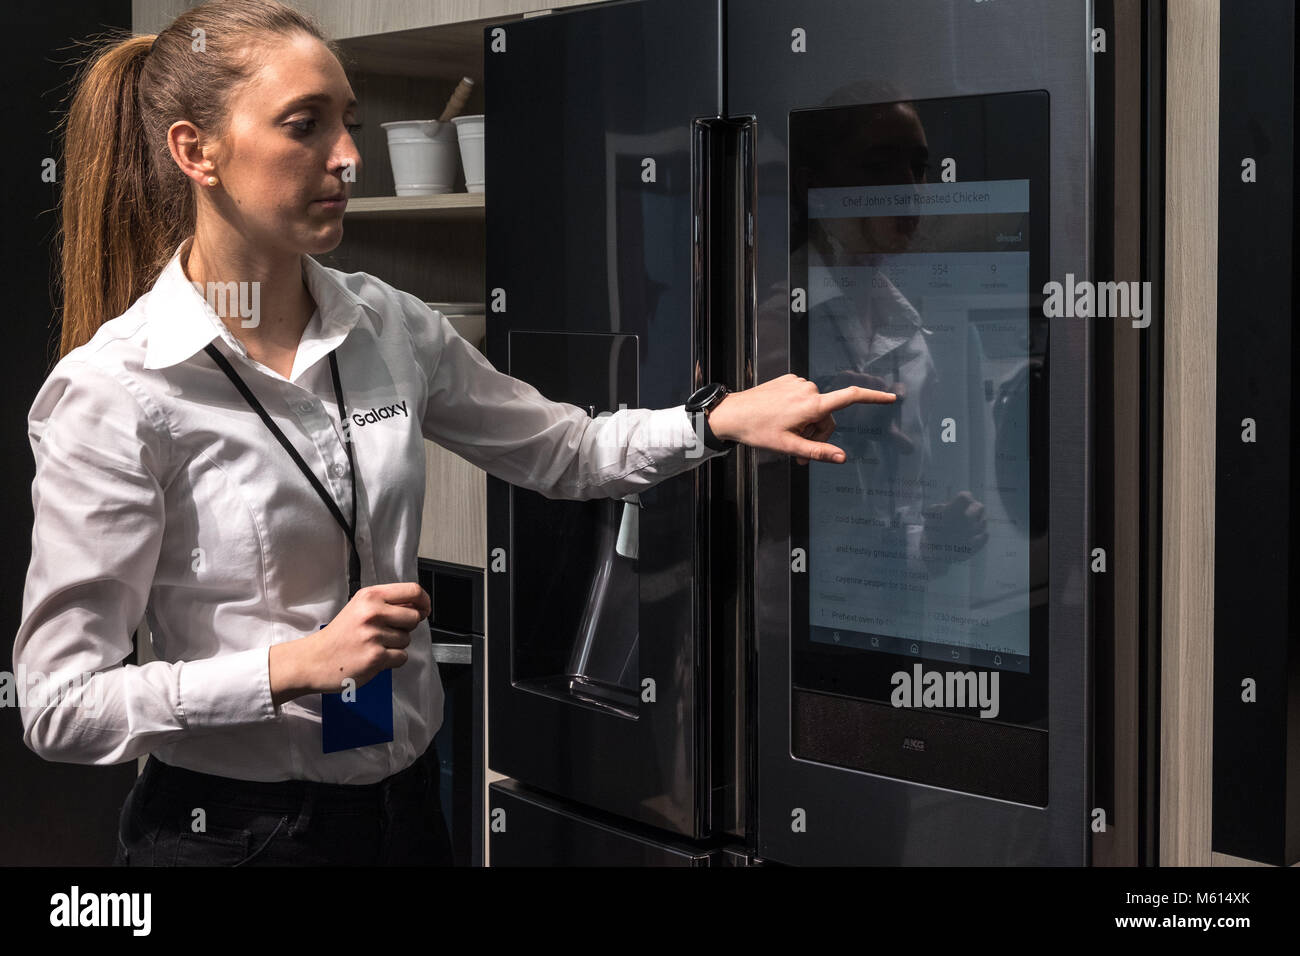 Refrigerator Control Panel Stock Photo - Alamy